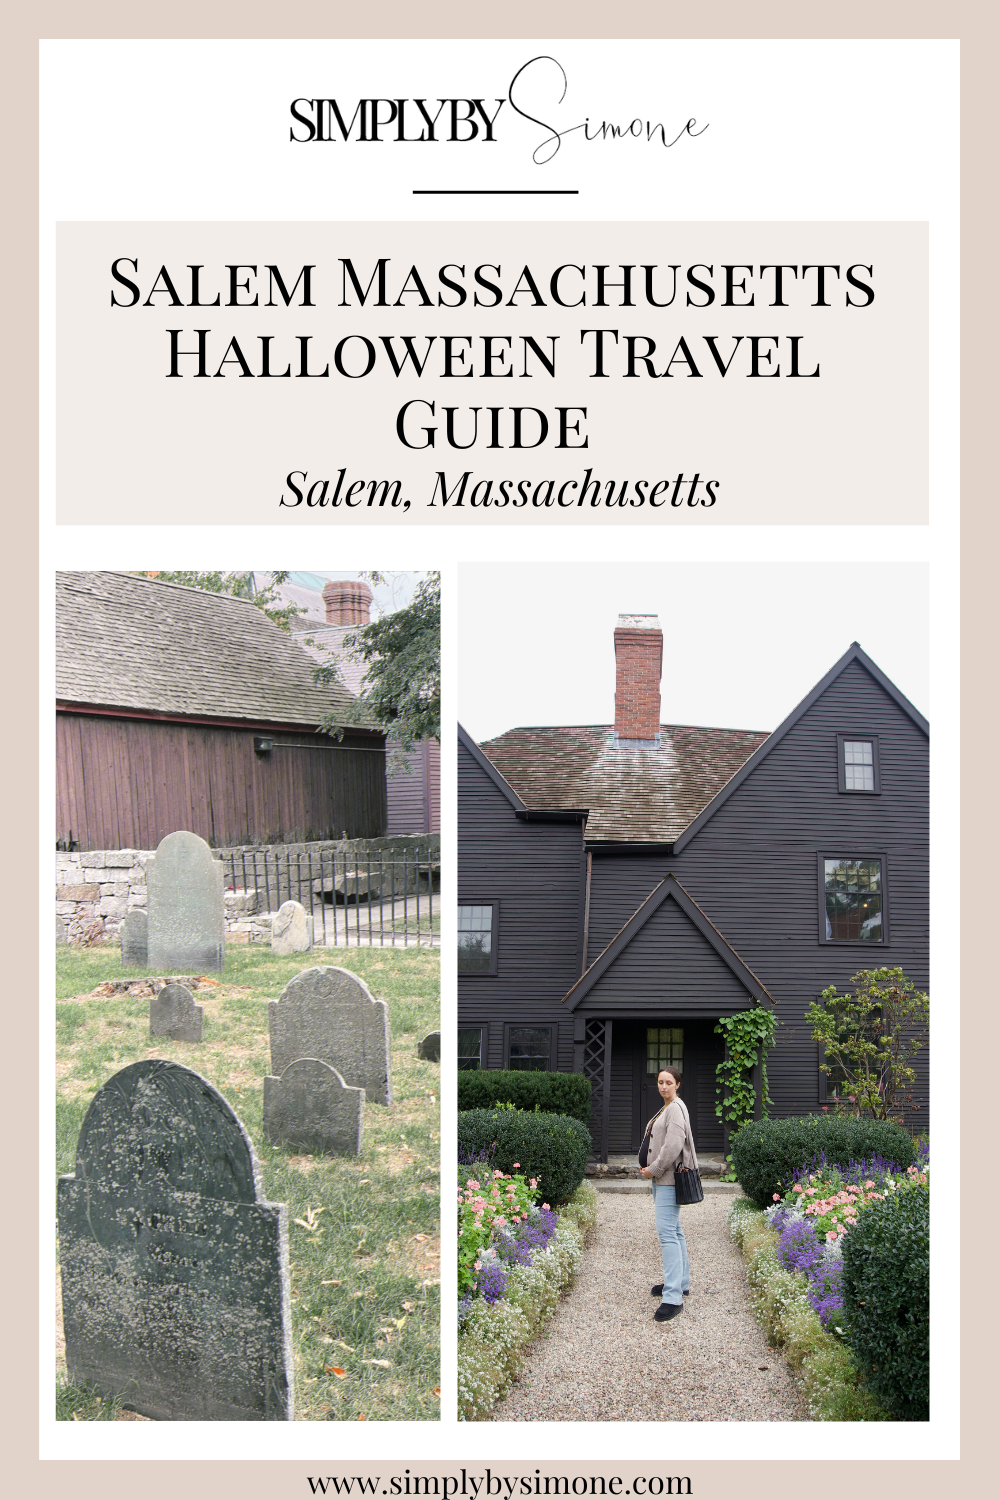 Salem Massachusetts Halloween Travel Guide